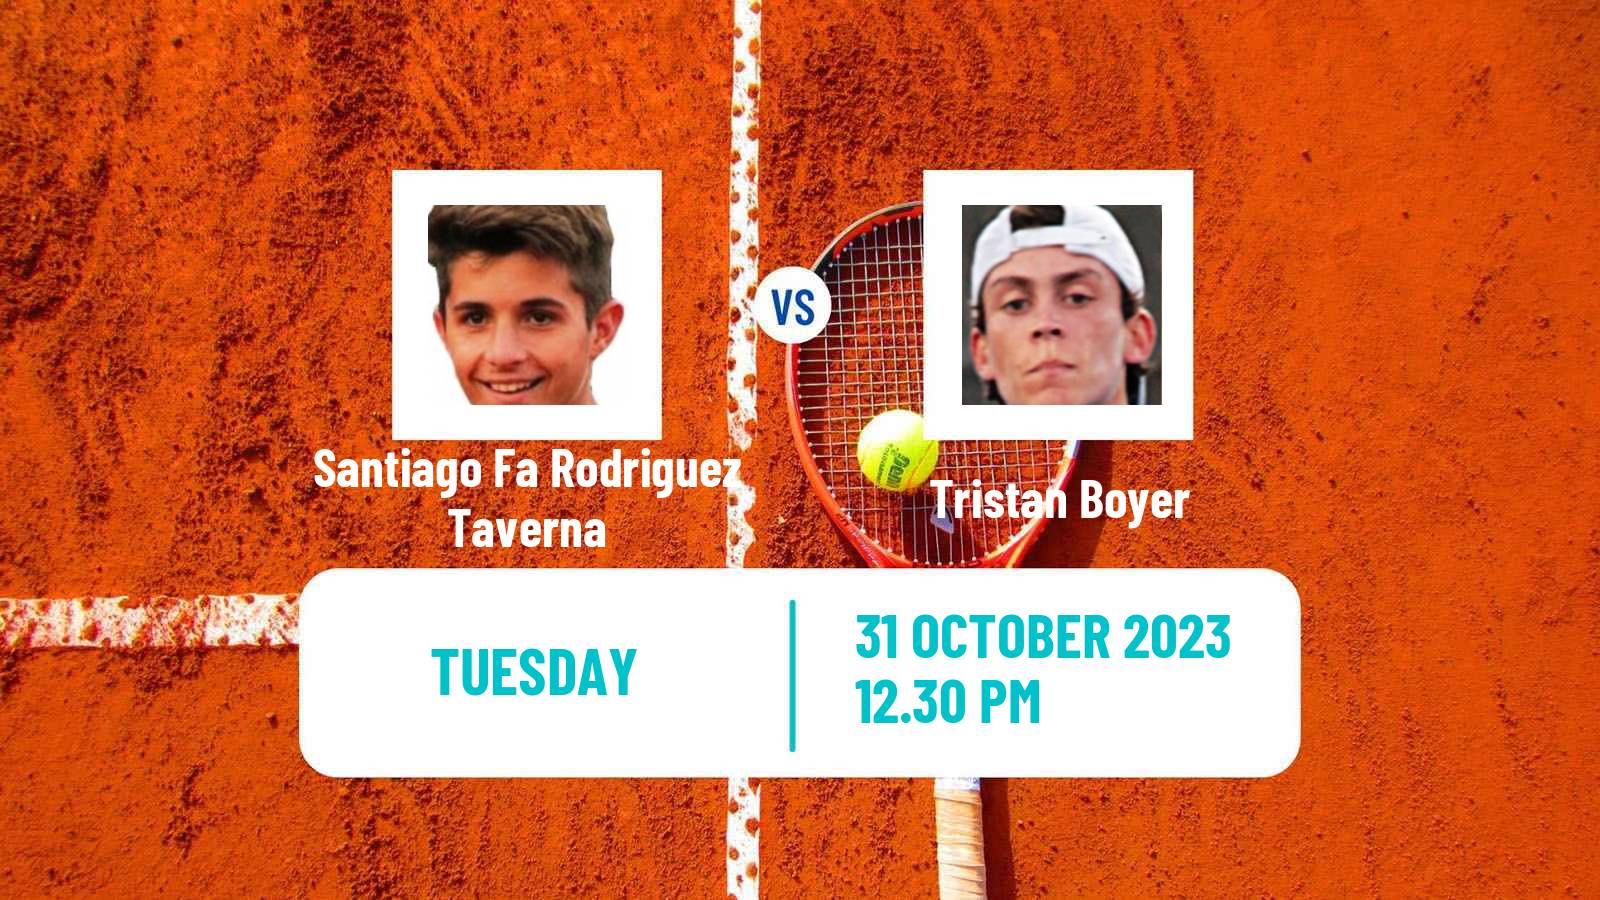 Tennis Guayaquil Challenger Men Santiago Fa Rodriguez Taverna - Tristan Boyer